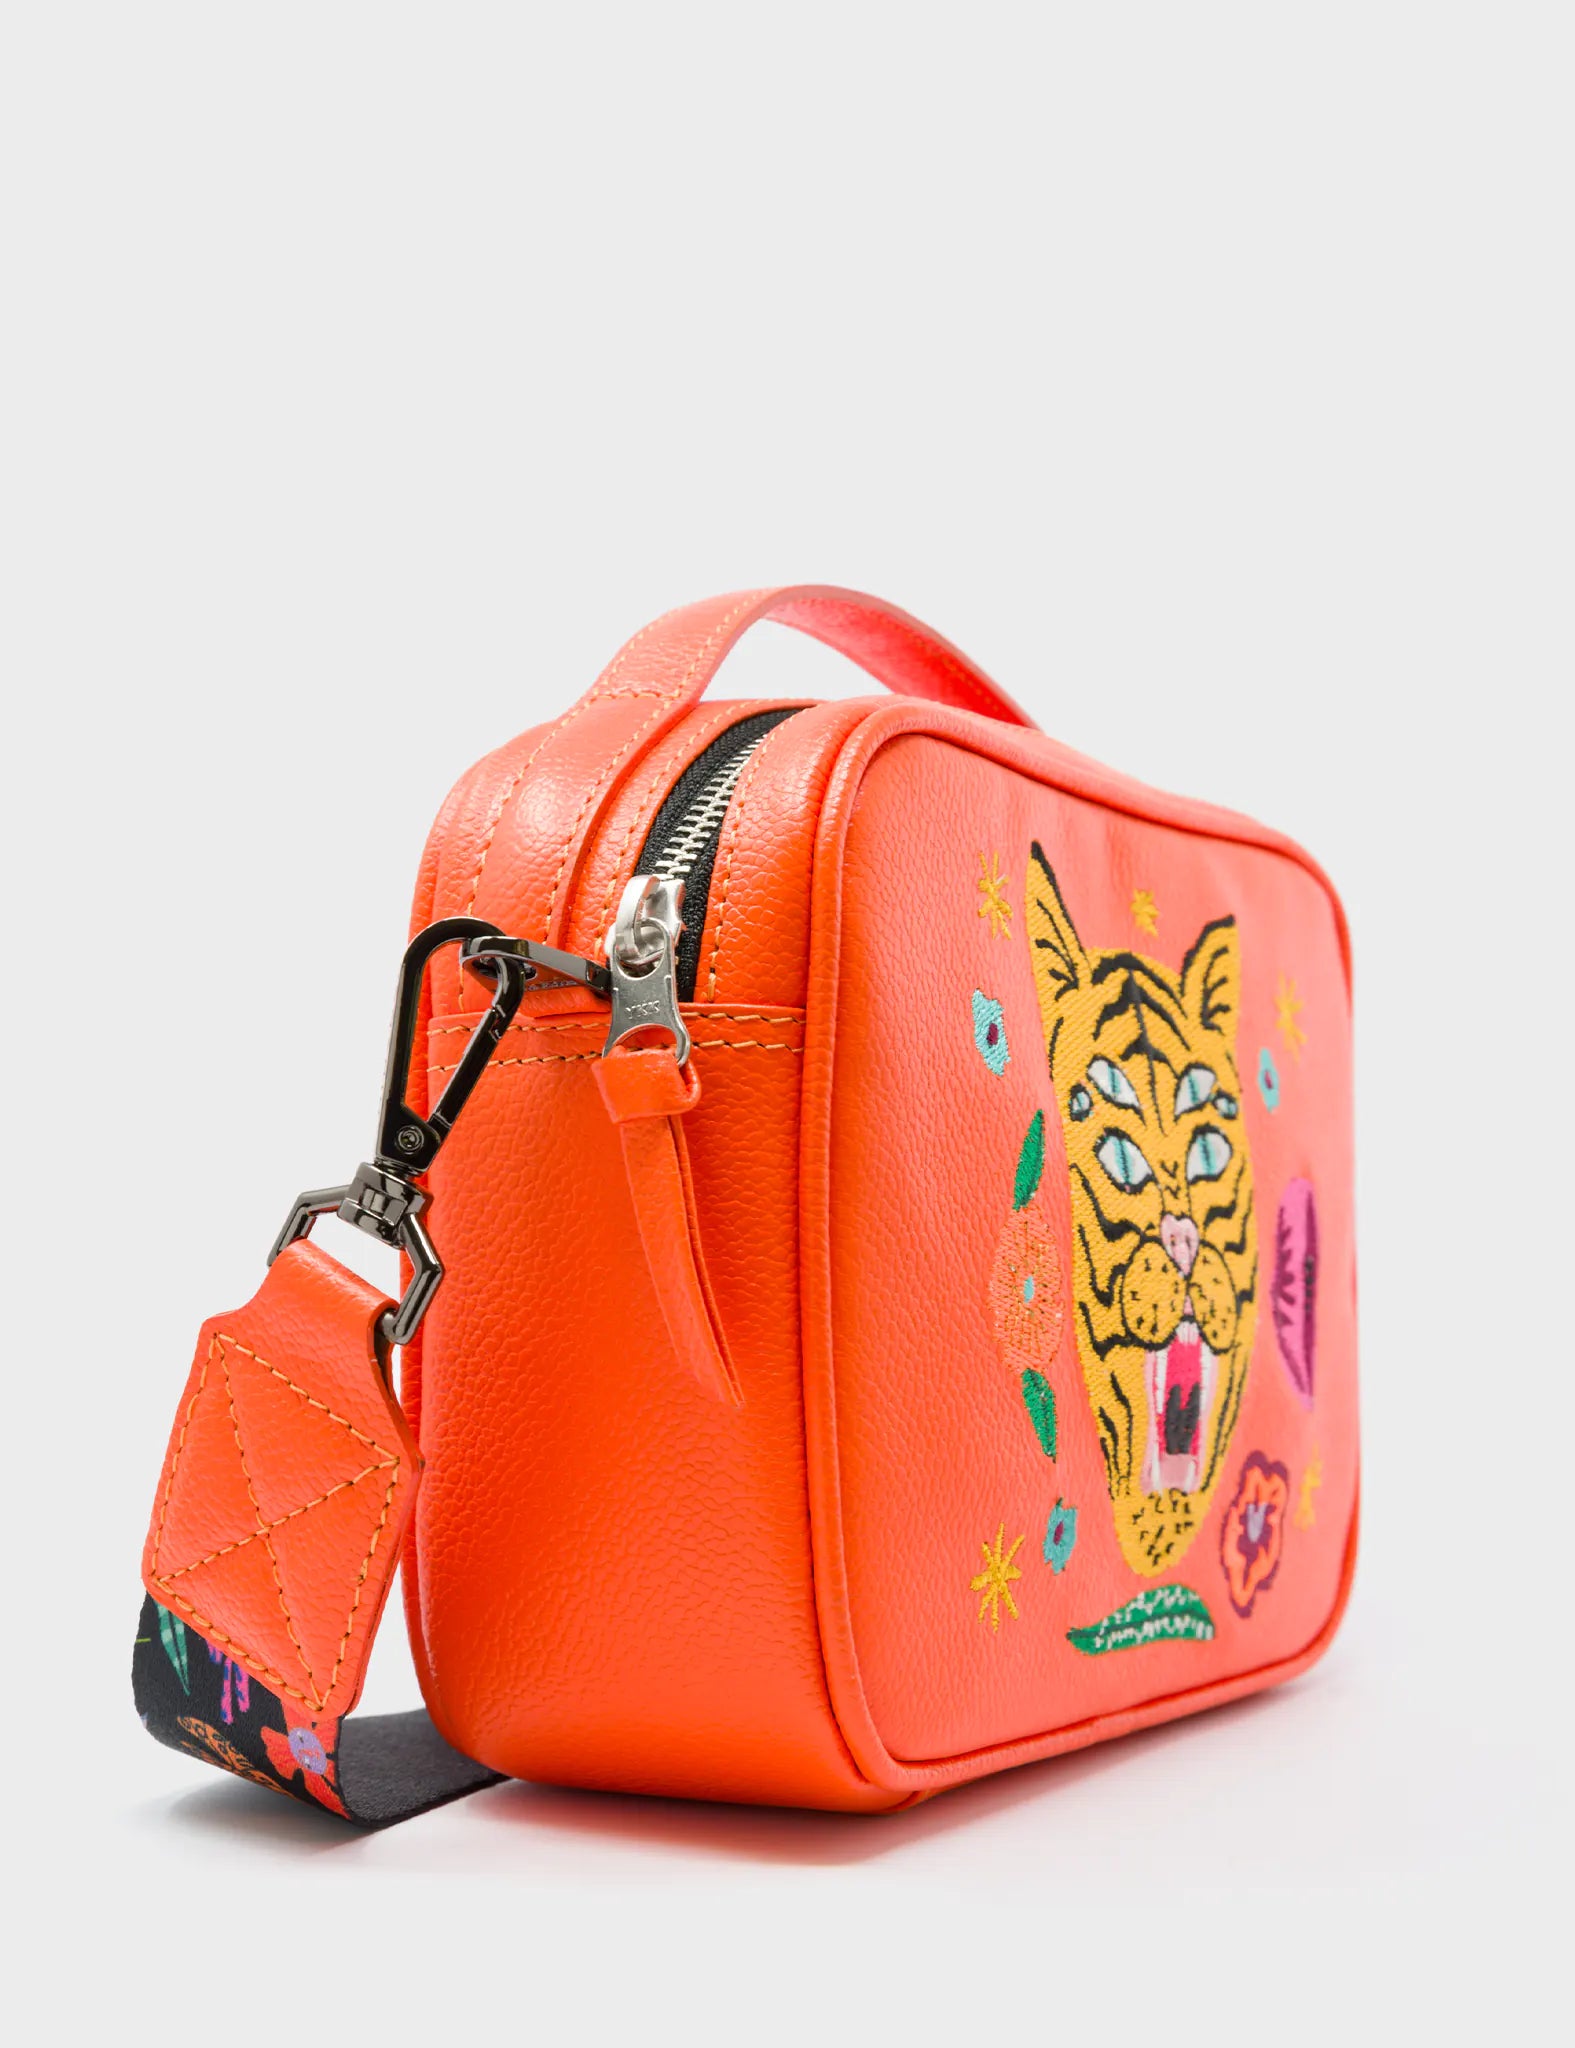 Verto Crossbody Vermillion Orange Leather Handbag - Tiger and Flowers Embroidery - Side